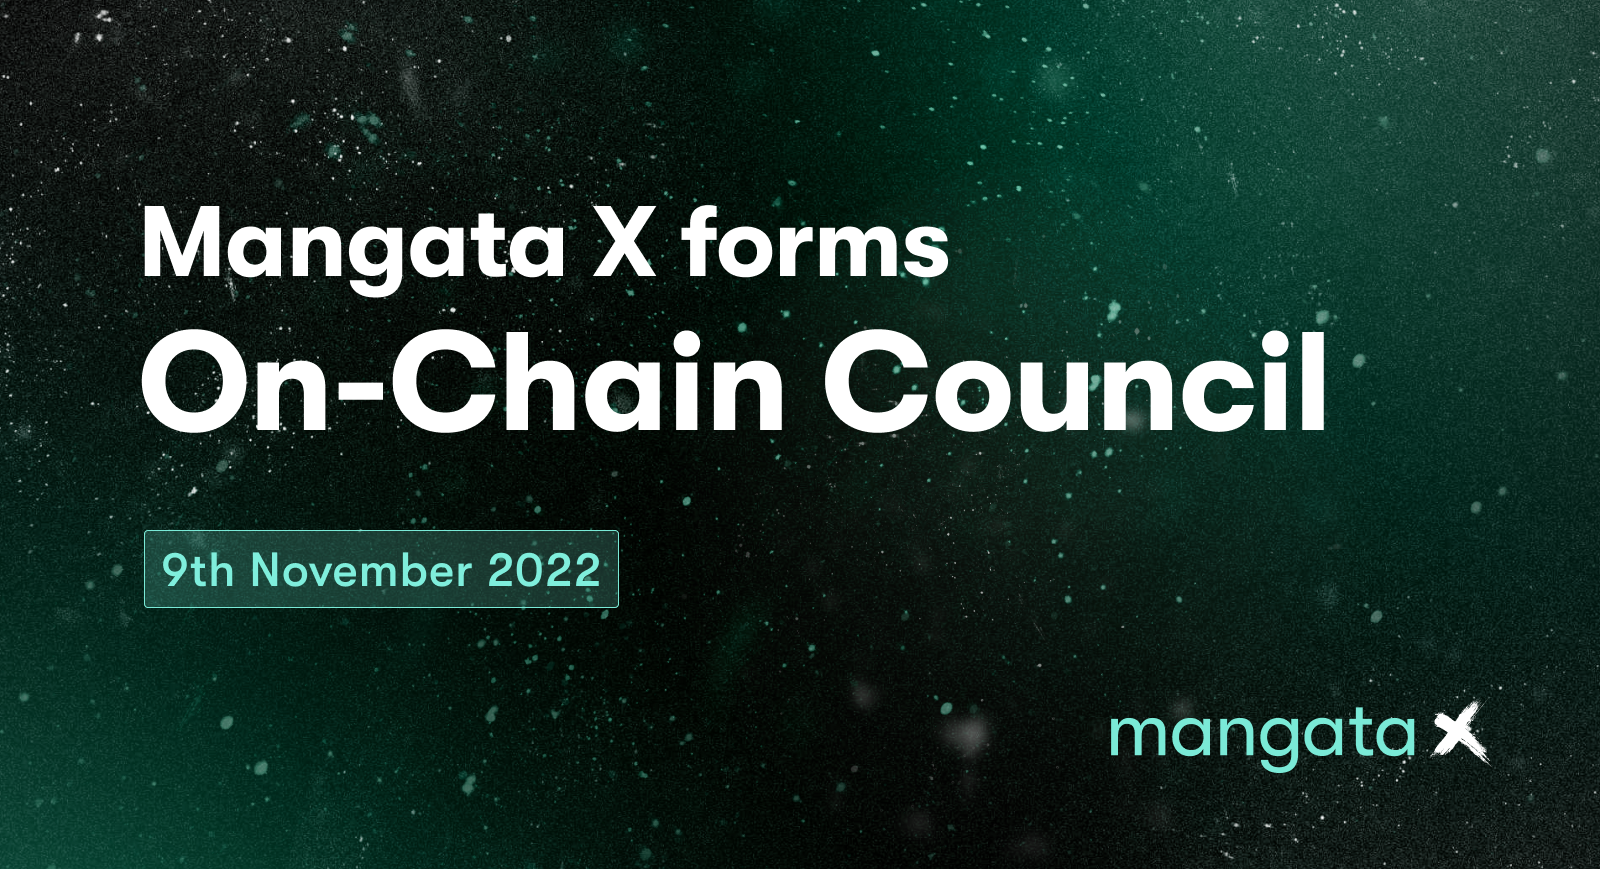 Mangata X Forms On-Chain Council